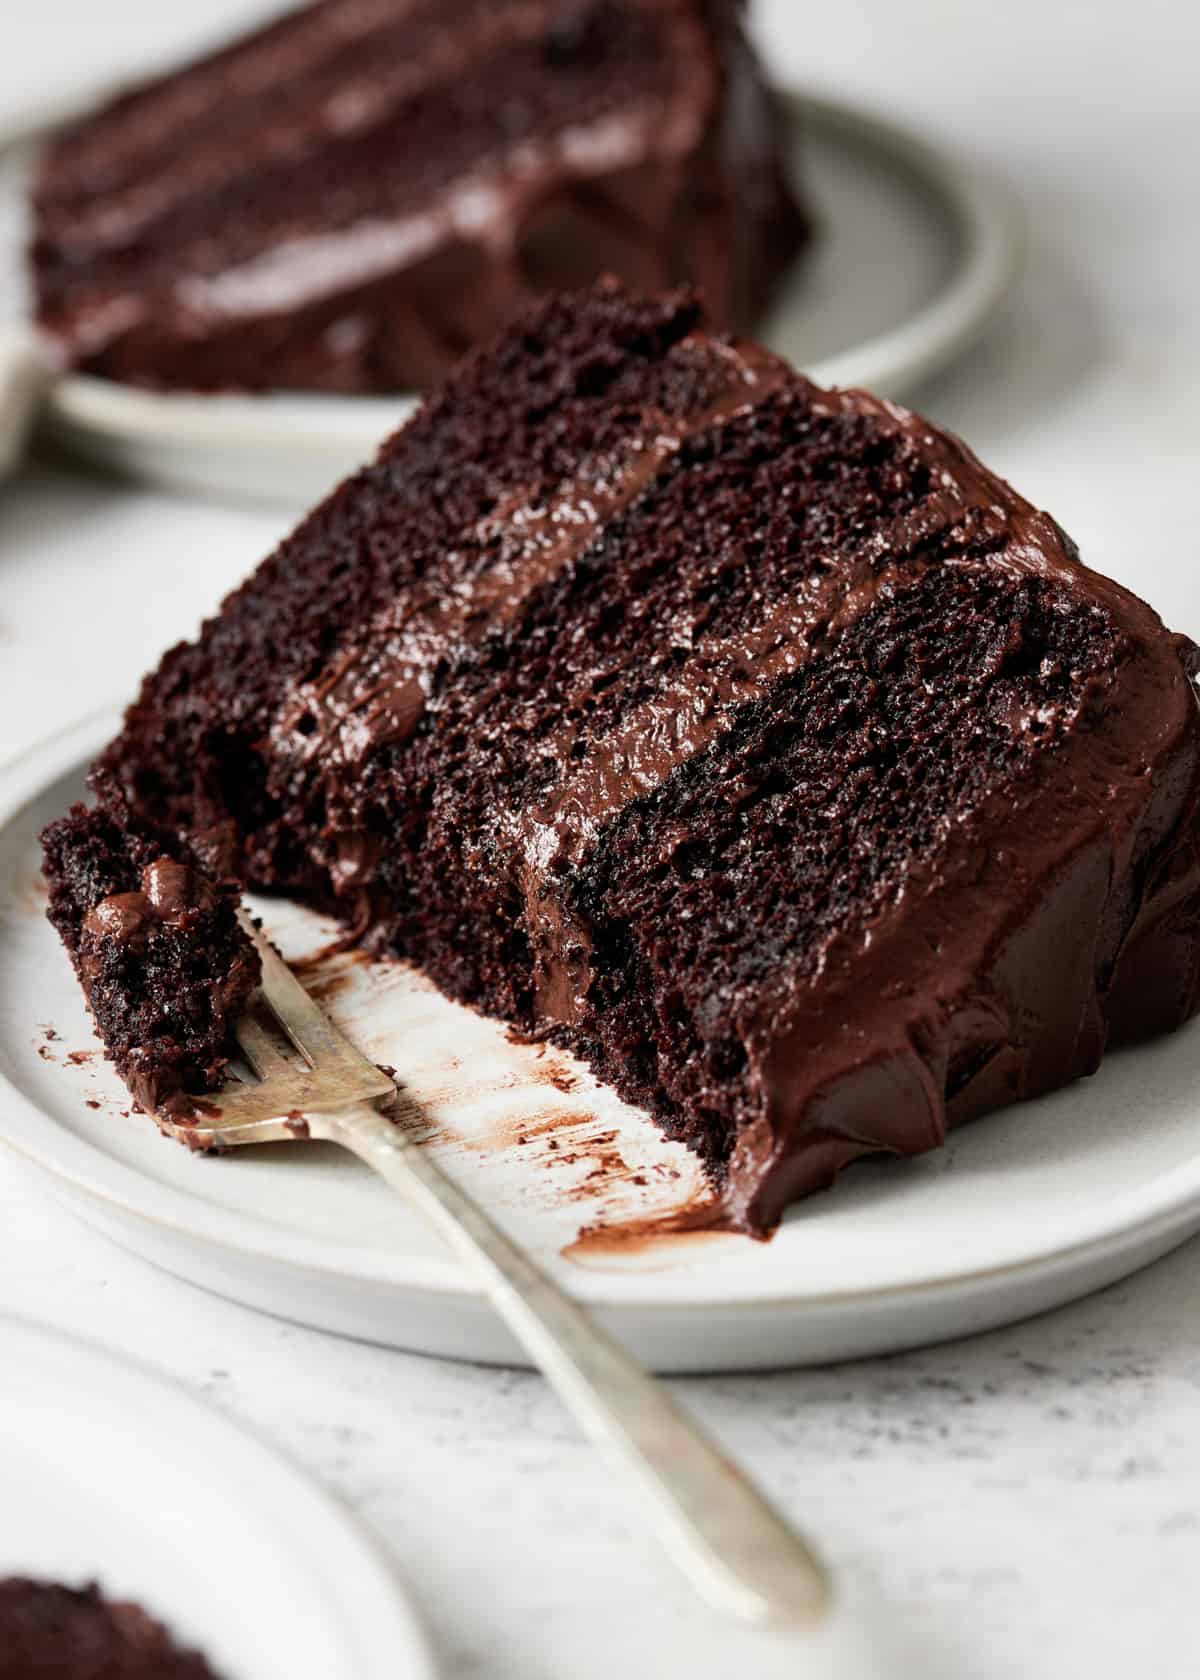 a slice of moist chocolate cake on a plate.